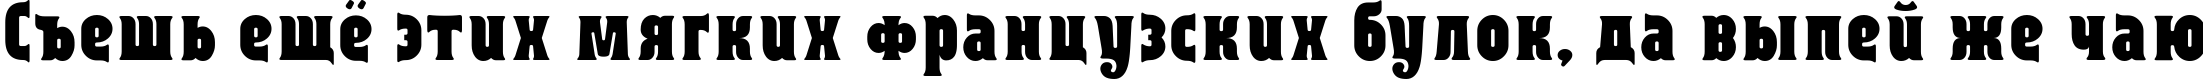 Пример написания шрифтом Capitalist текста на русском